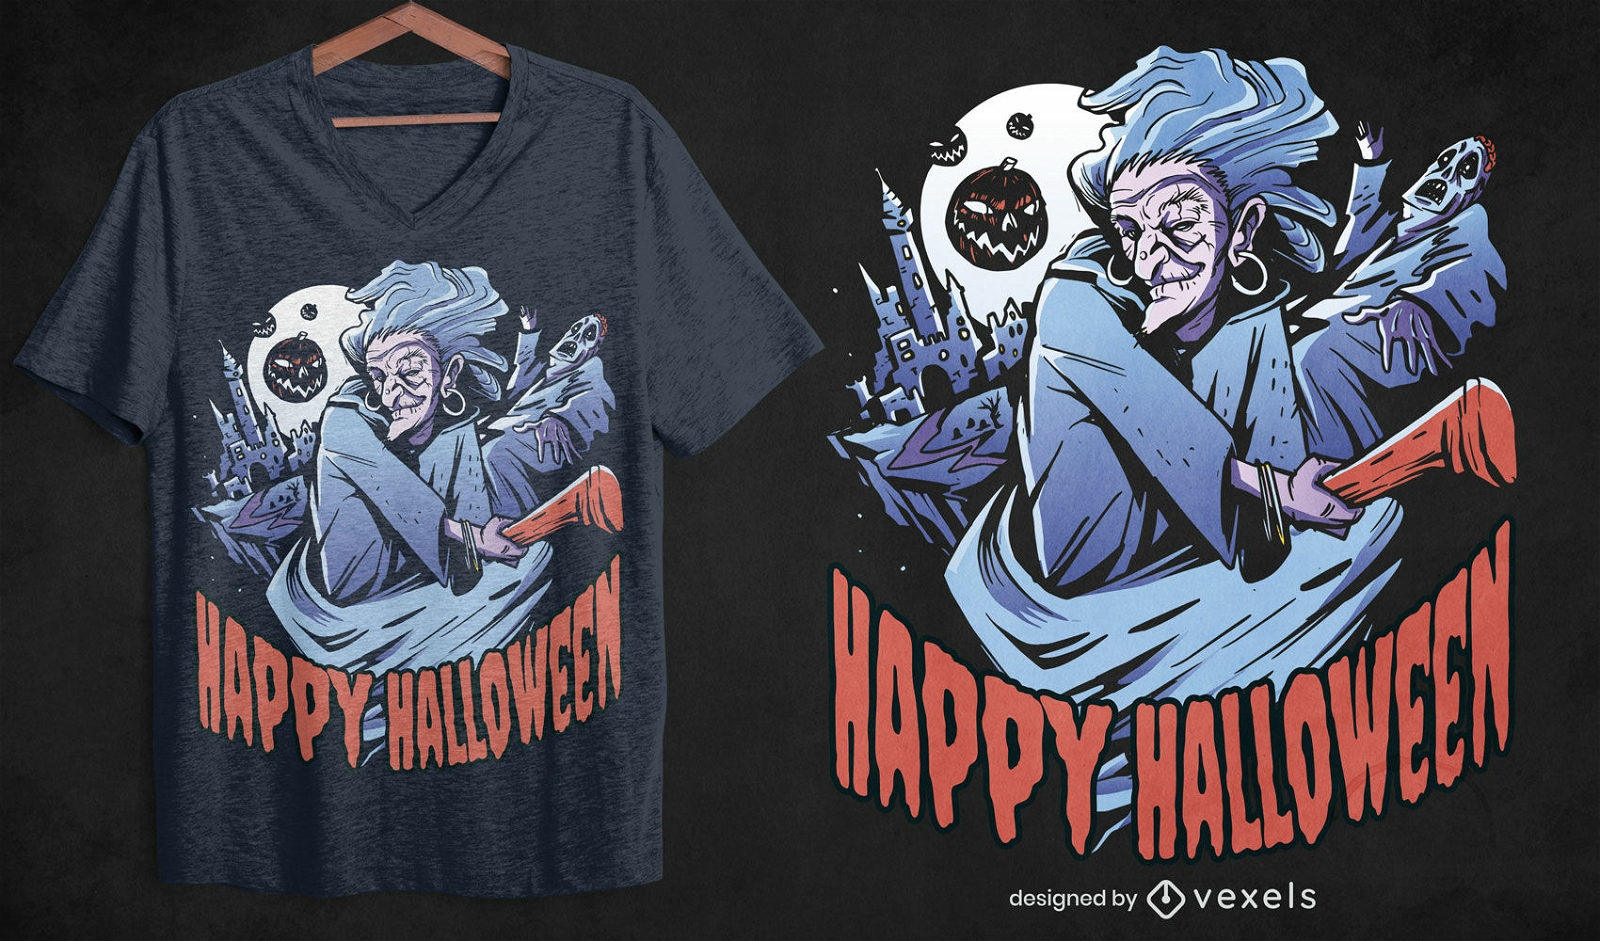 Designs PNG de desenho de halloween para Camisetas e Merch